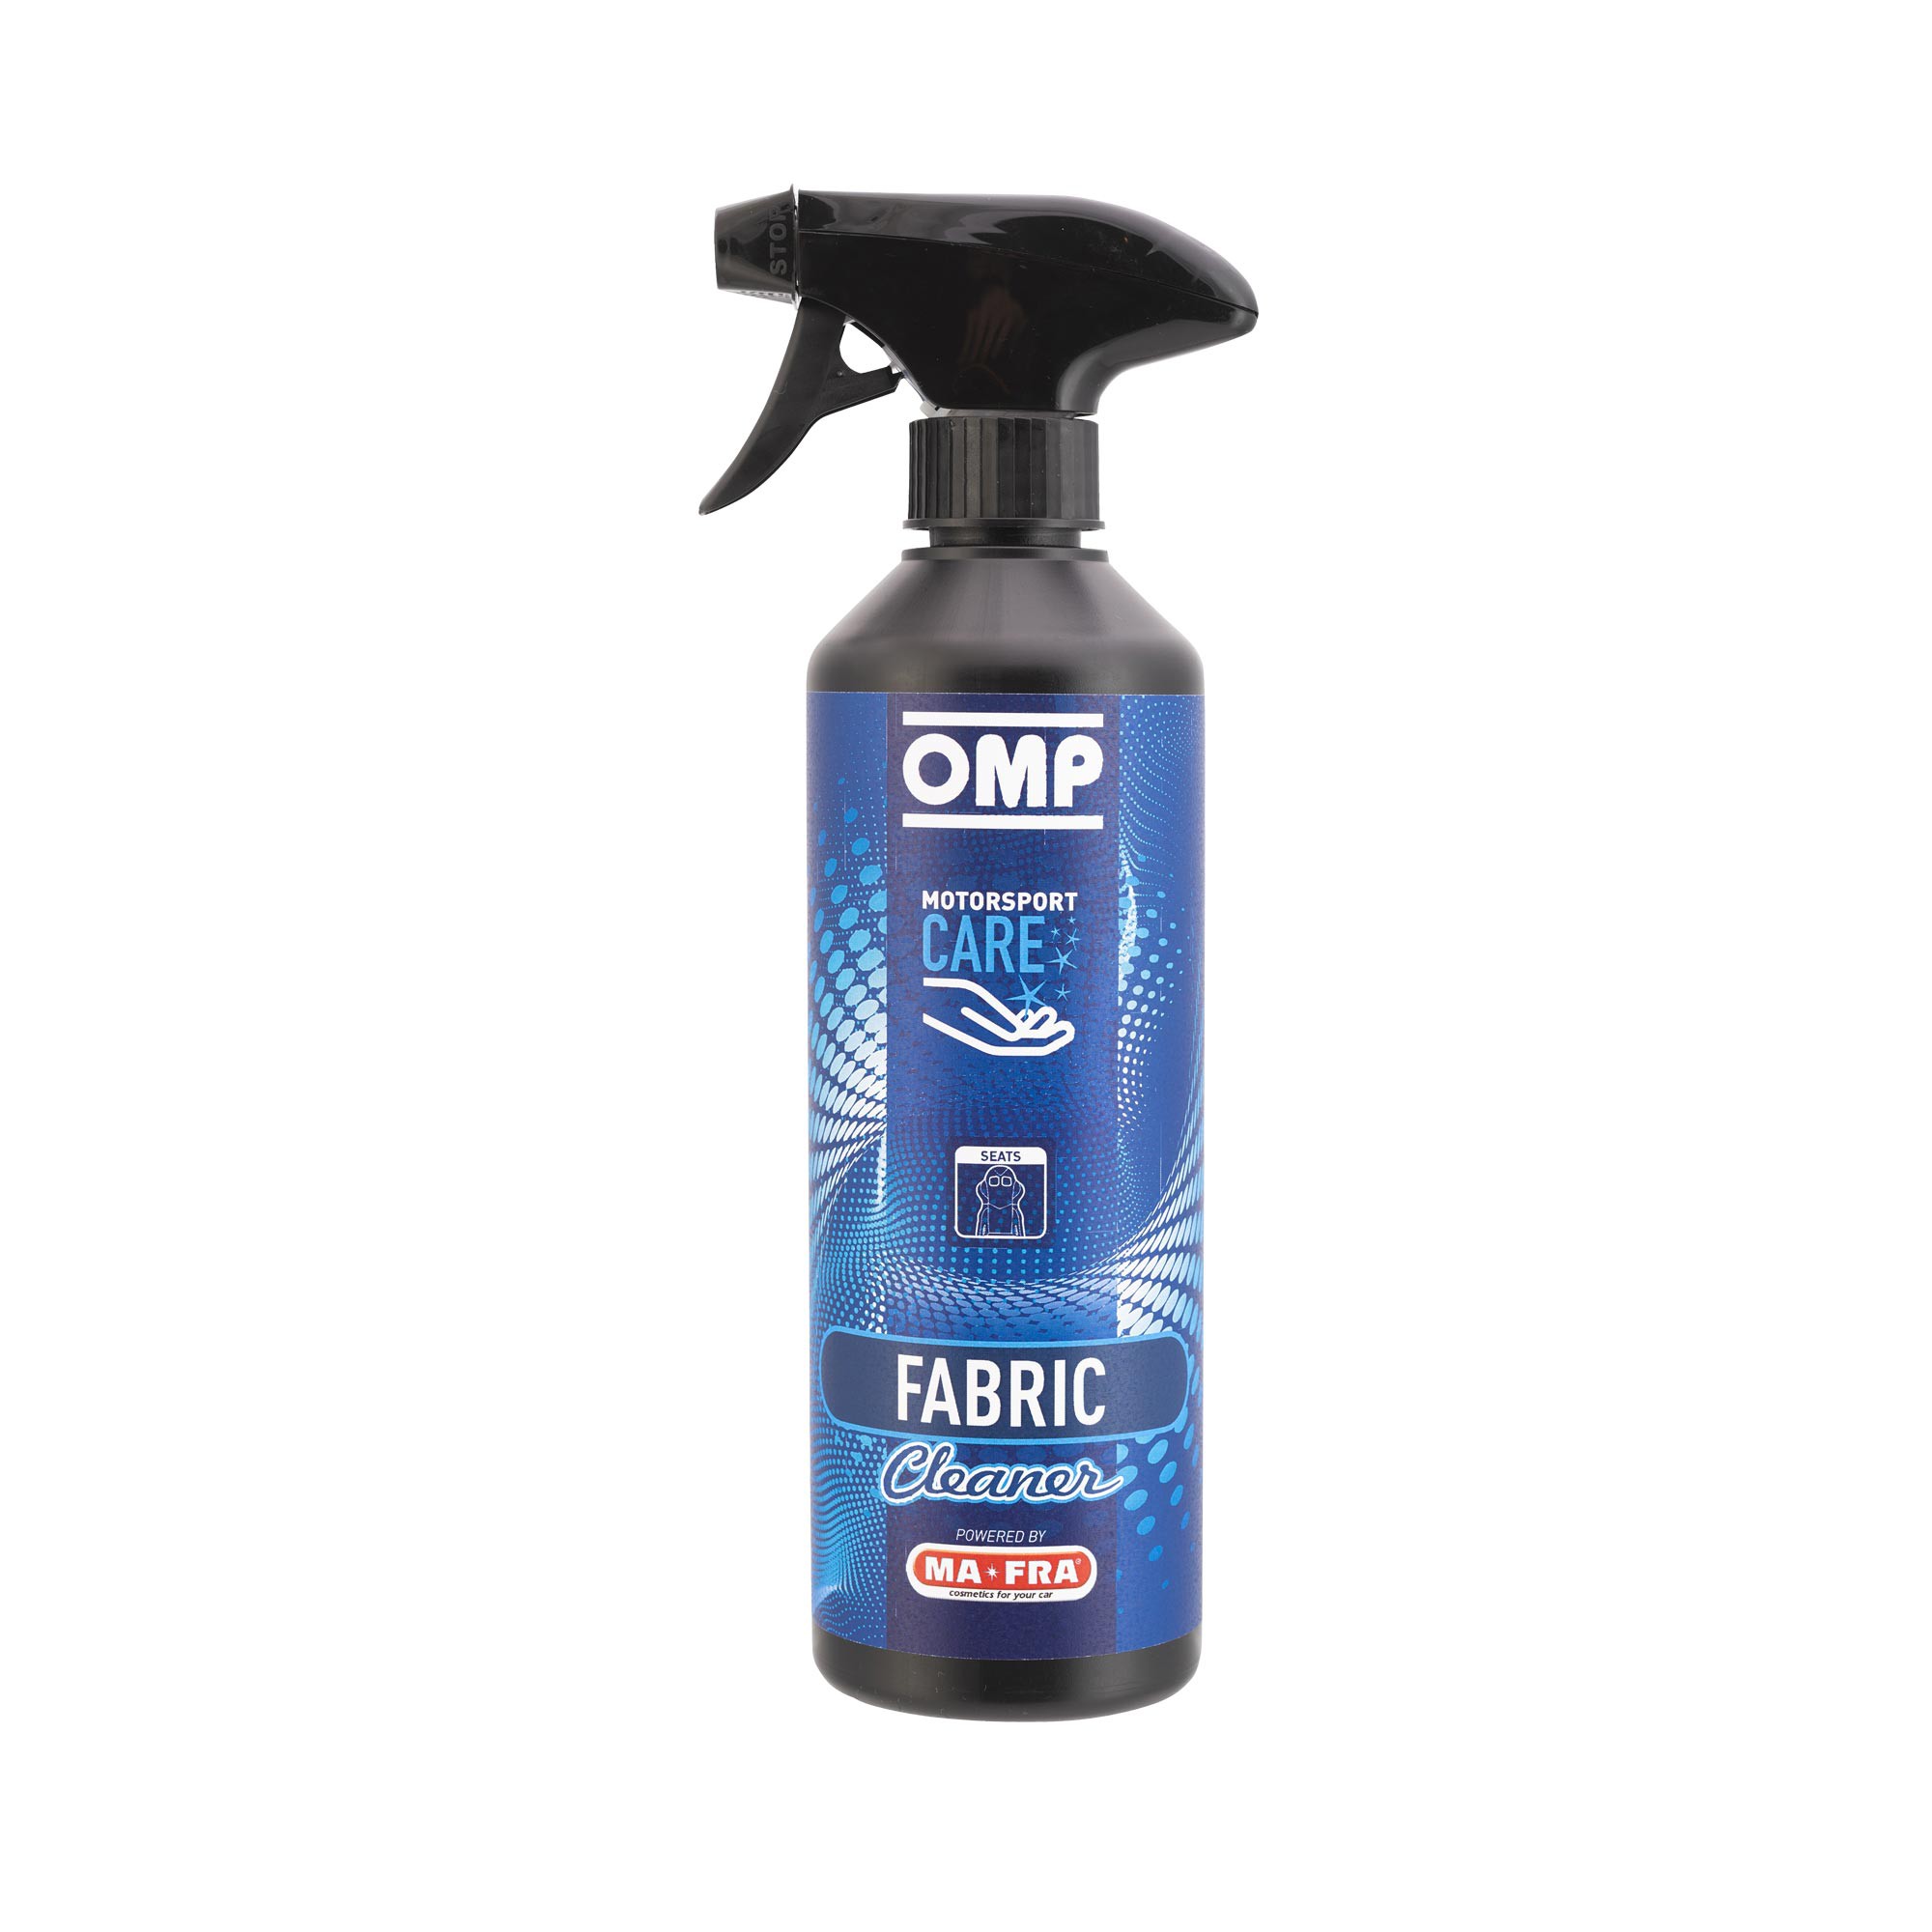 OMP Motorsport Care - Fabric cleaner